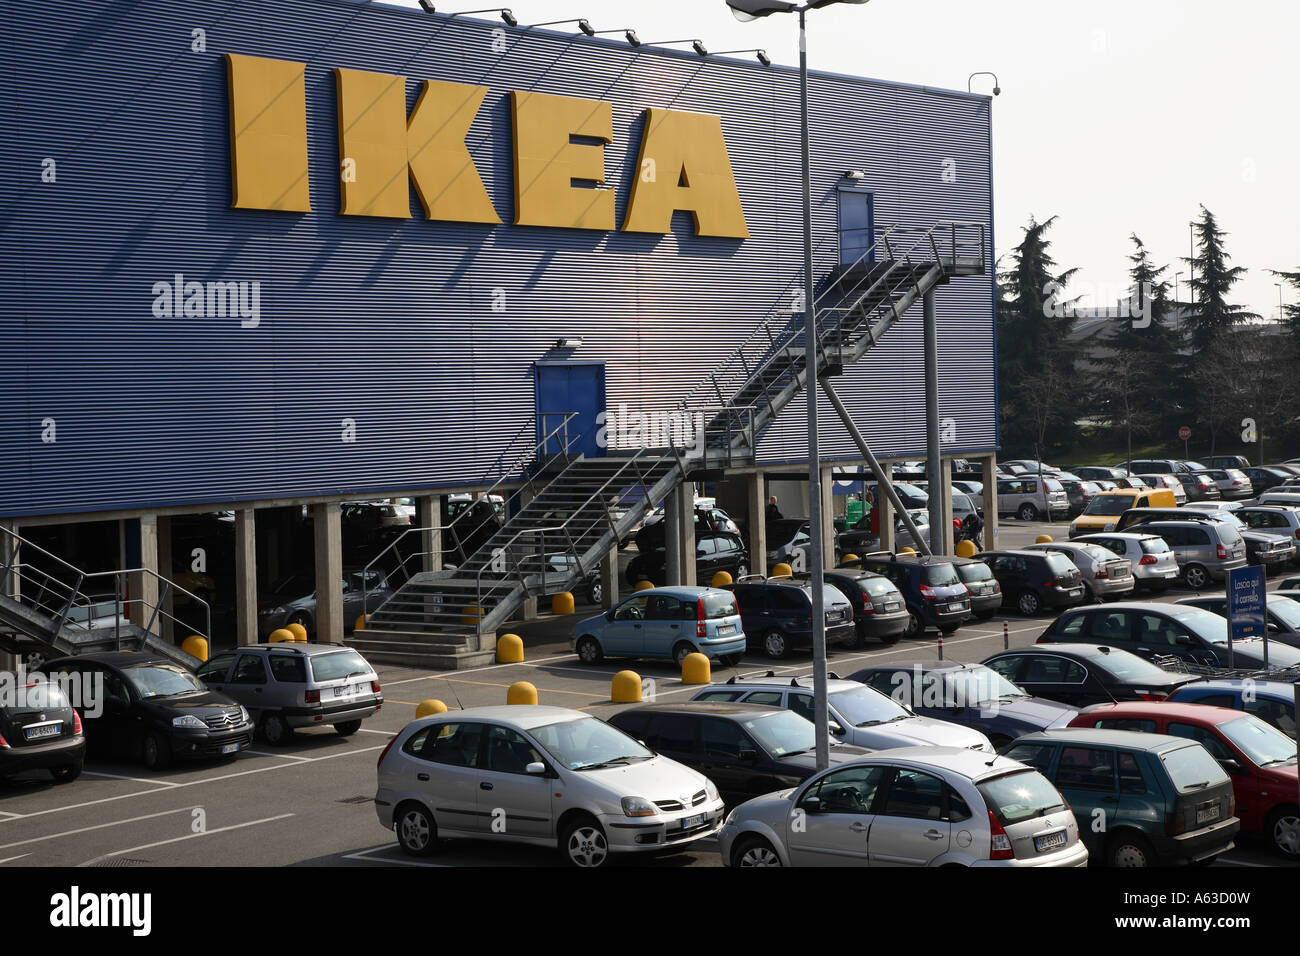 Ikea department store Stock Photo - Alamy